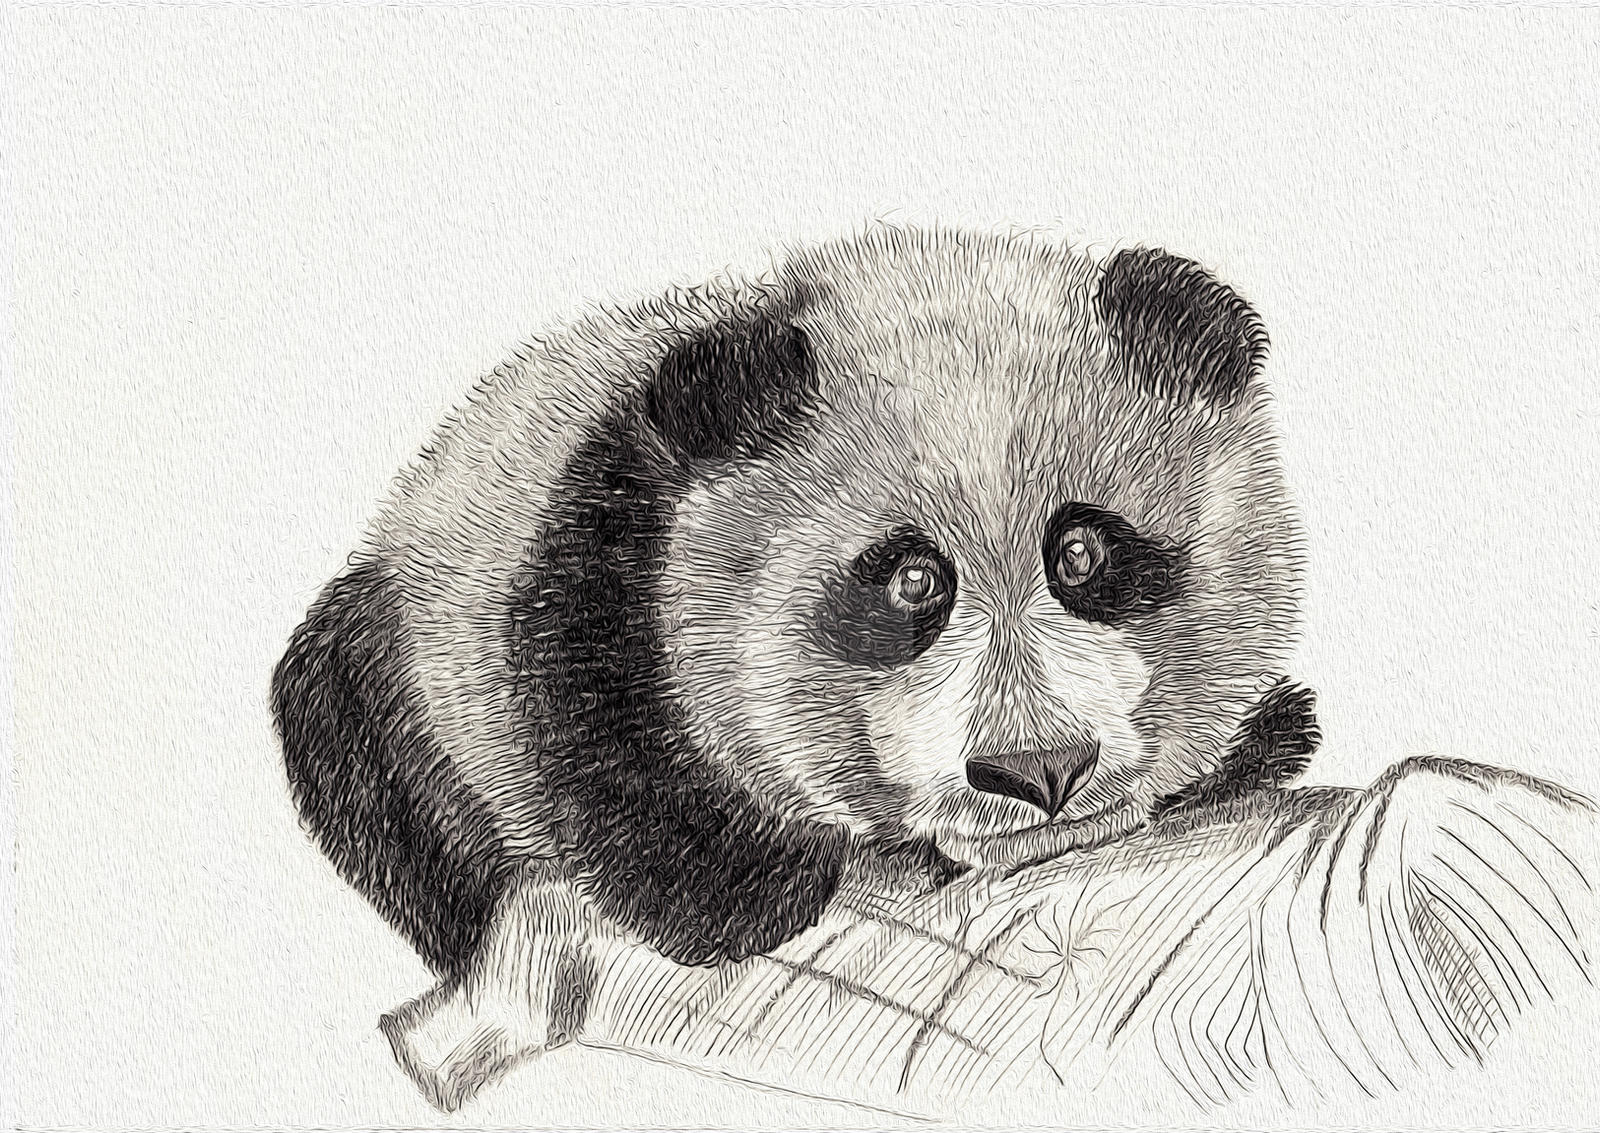 Panda (Sketch) by stefanogemi on DeviantArt